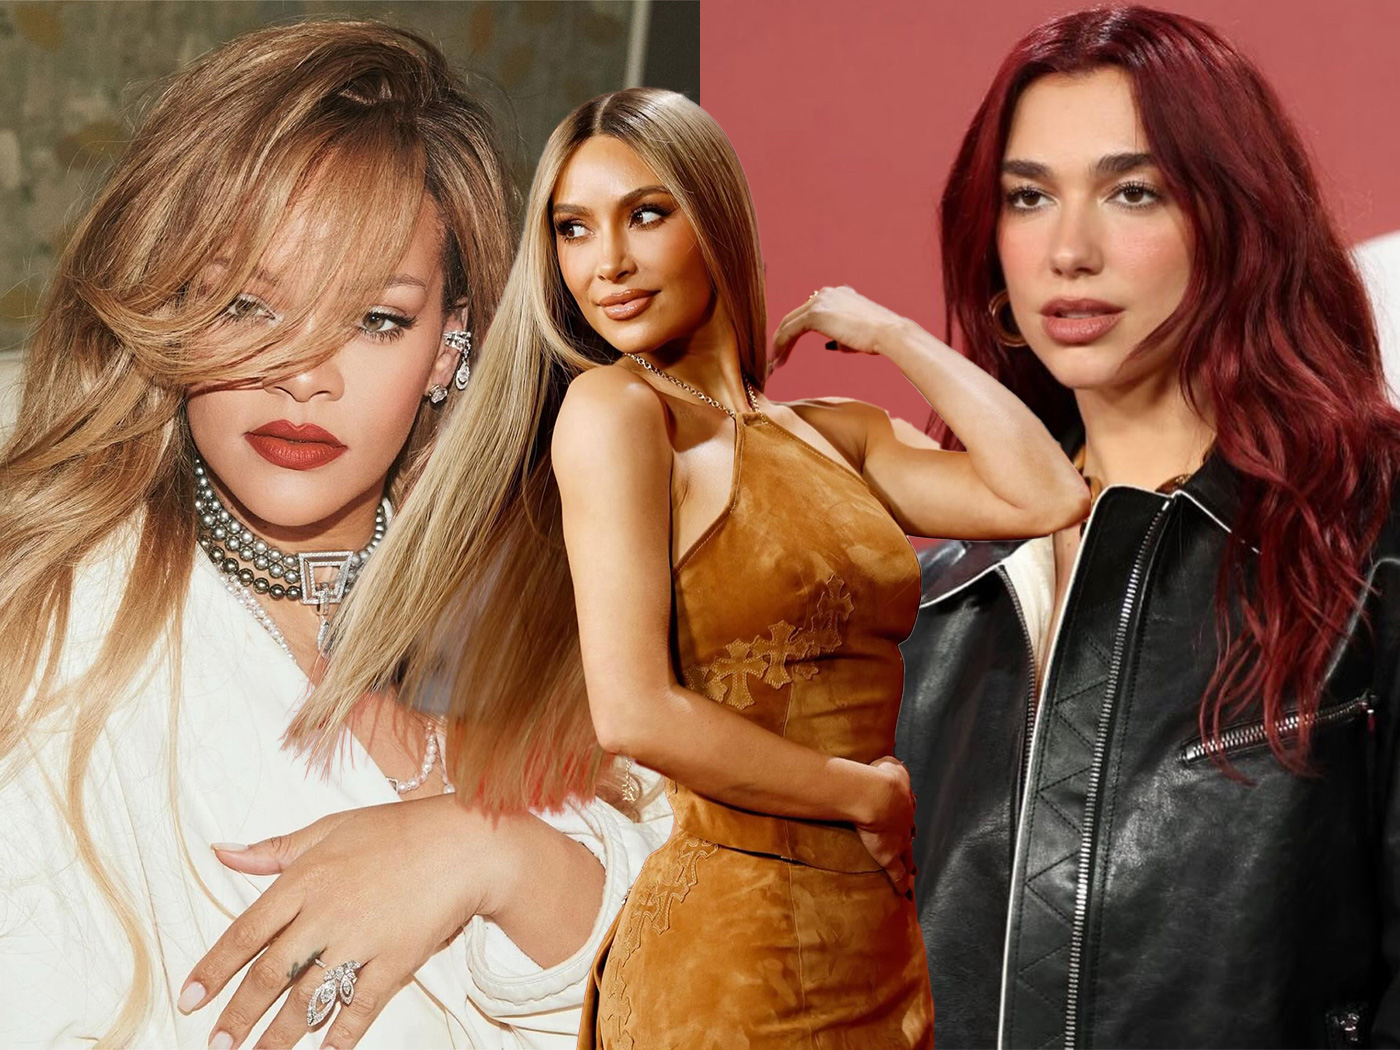 Celebrities: Αυτές είναι οι πιο εντυπωσιακές αλλαγές που έκαναν στο χρώμα των μαλλιών τους μέσα στη χρονιά